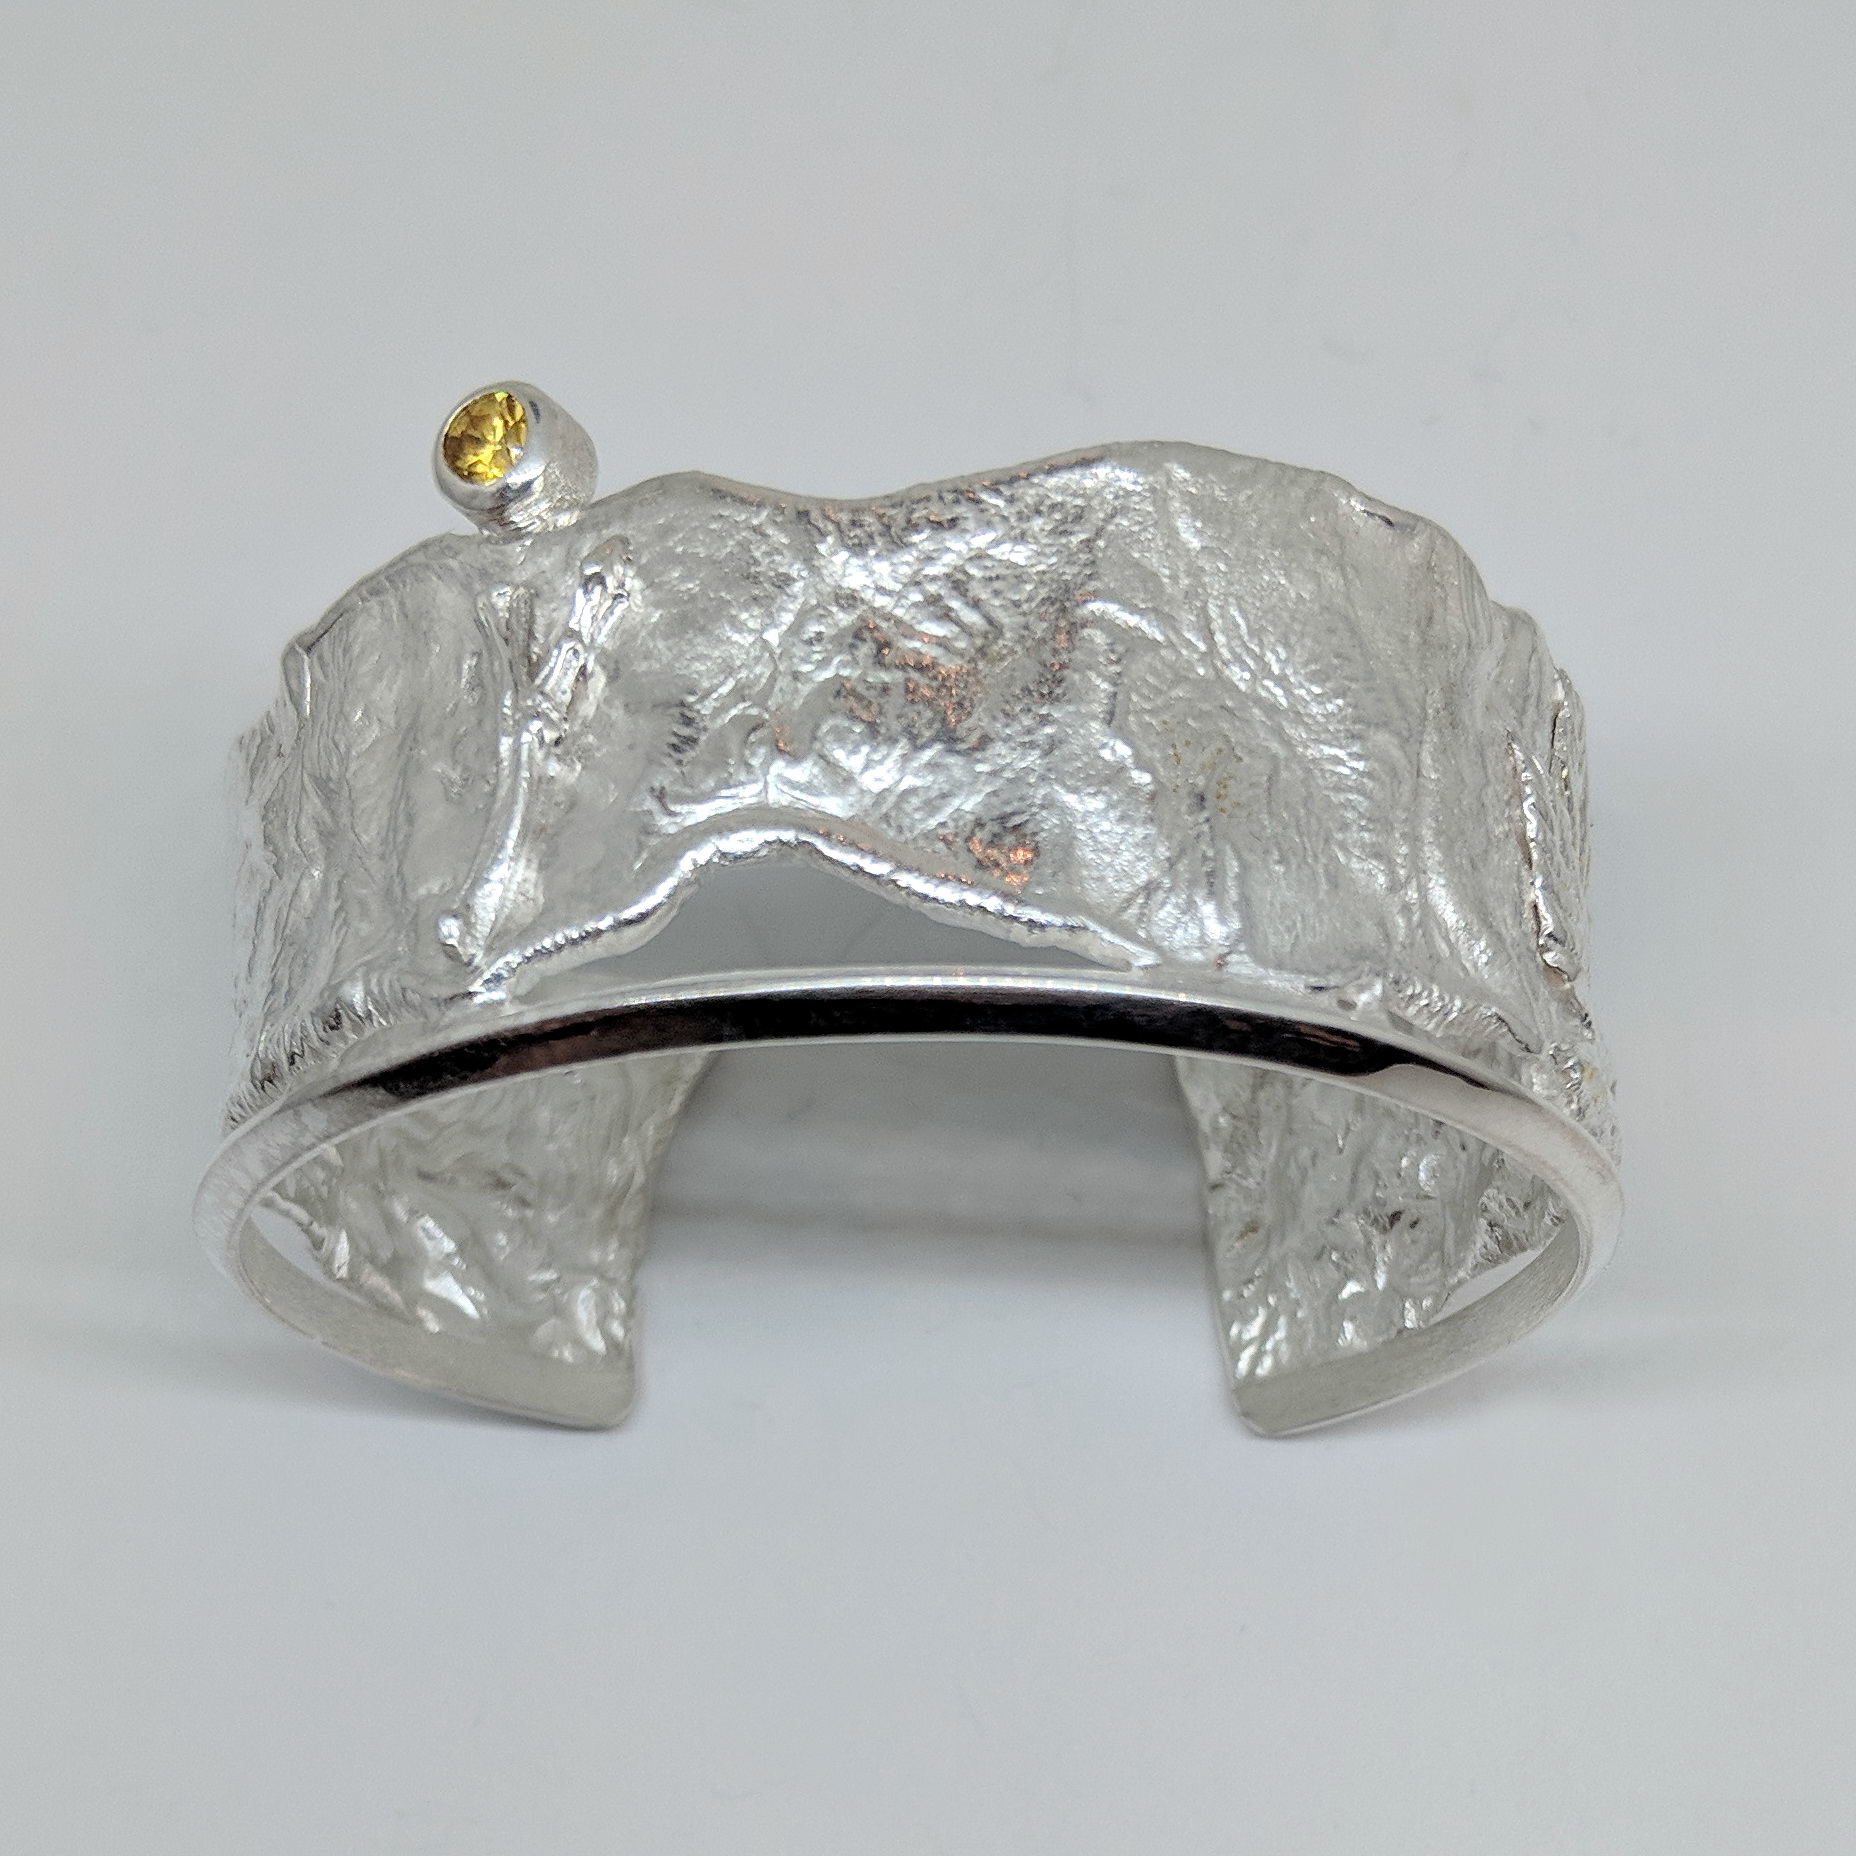 Medium Width Cuff Bracelet by Andrea Russell - The Avenue Gallery